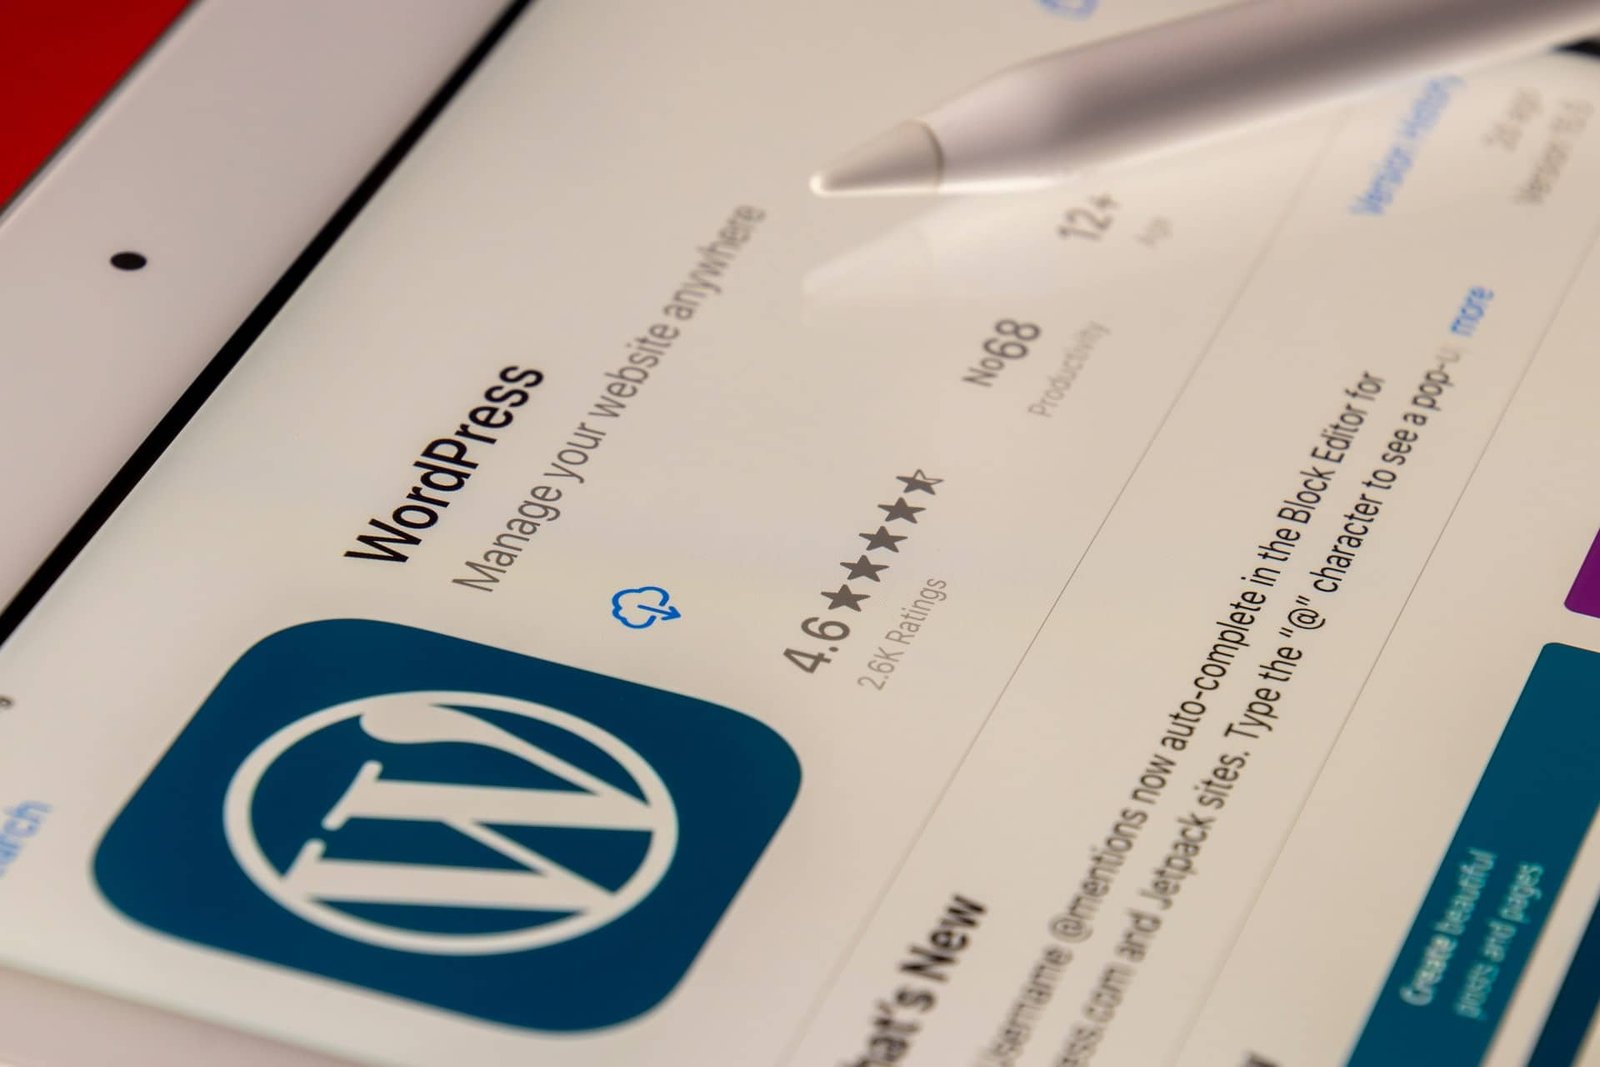 Why Should I Use WordPress?